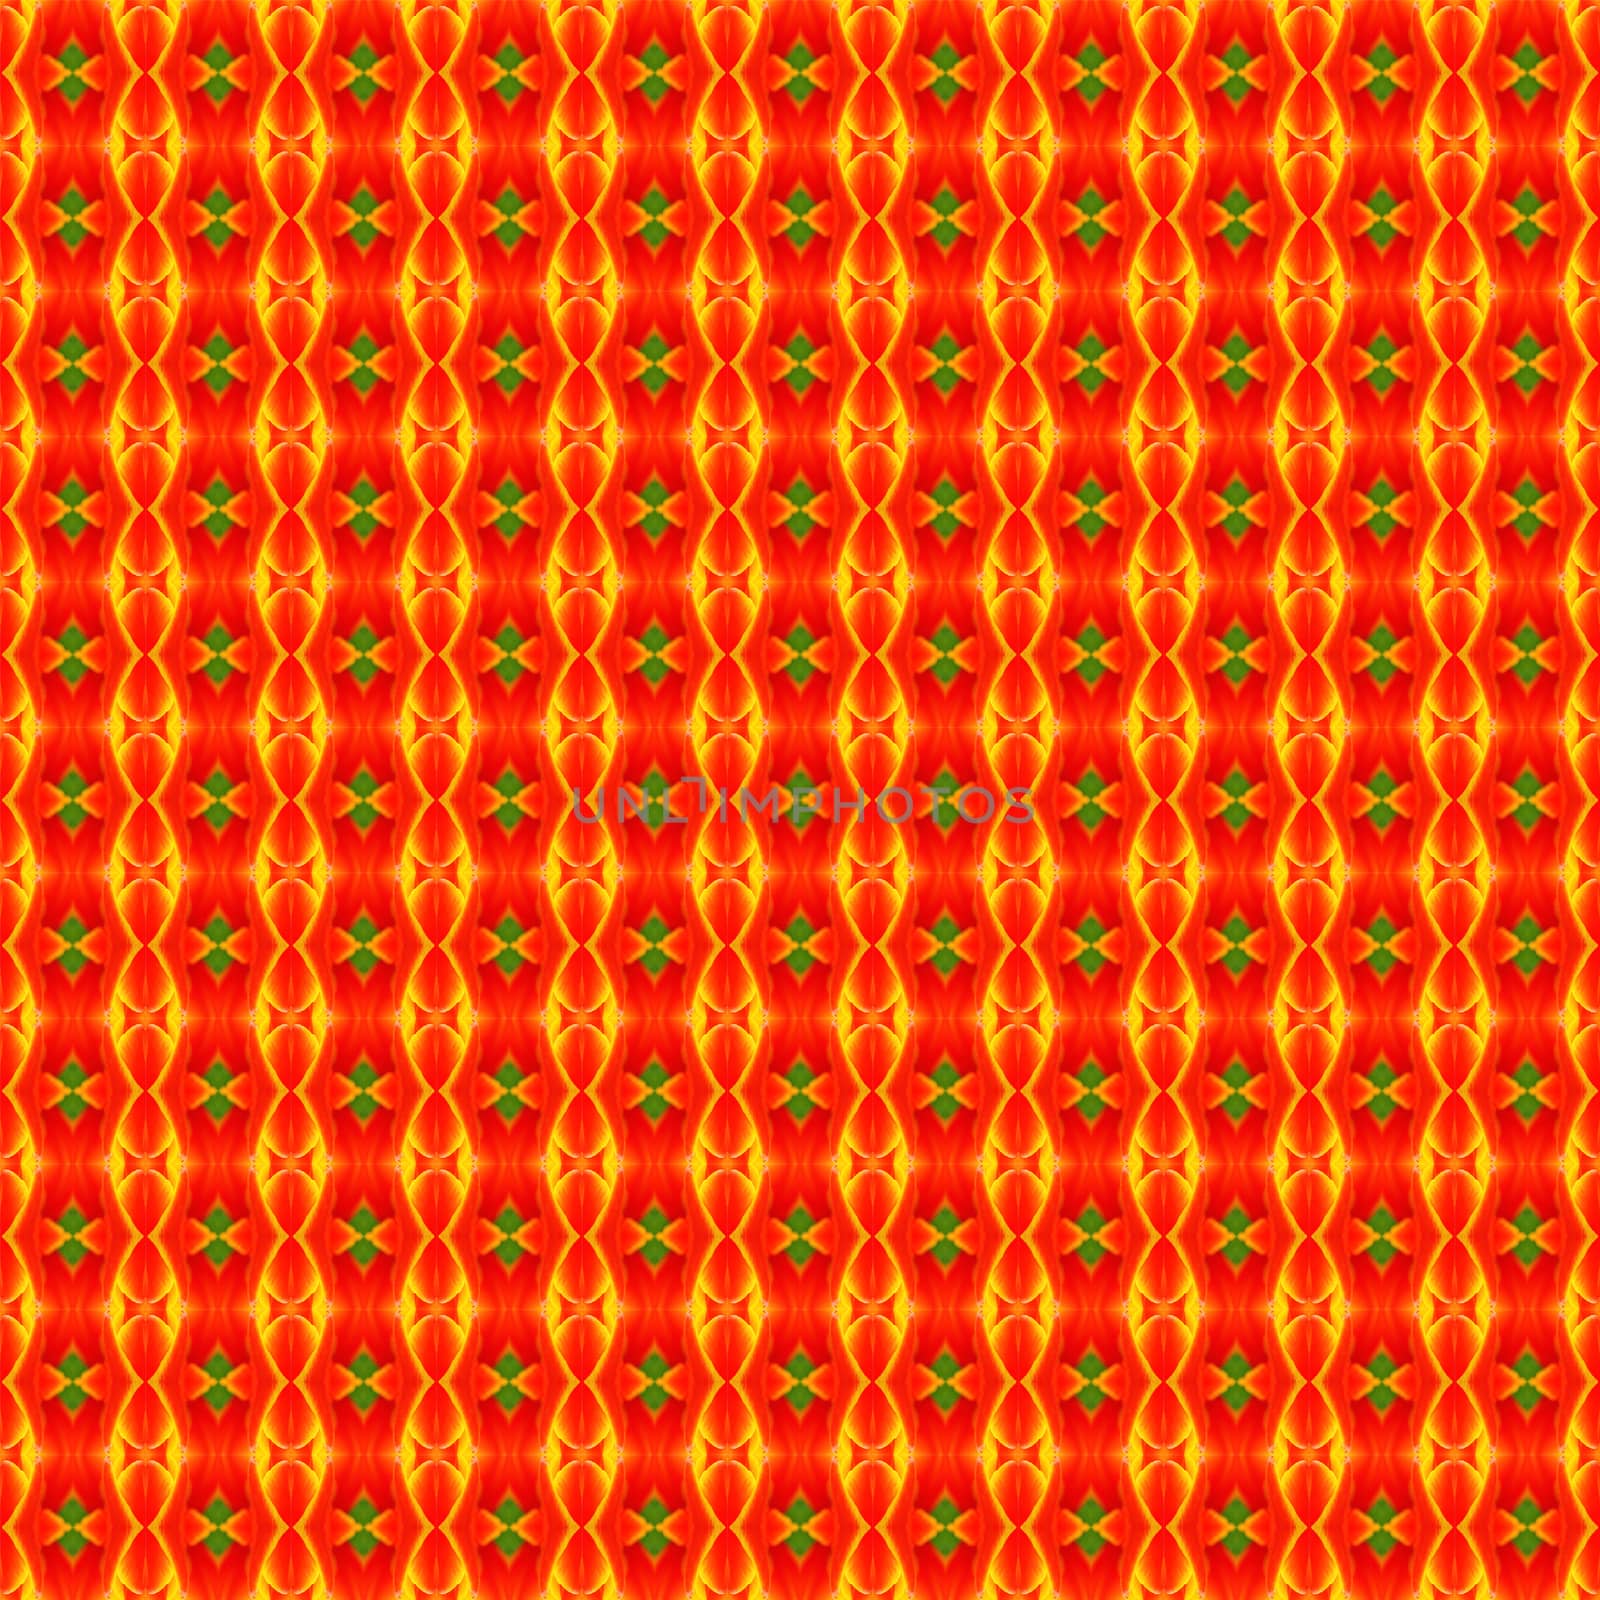 Abstract pattern. Texture background. Seamless illustration